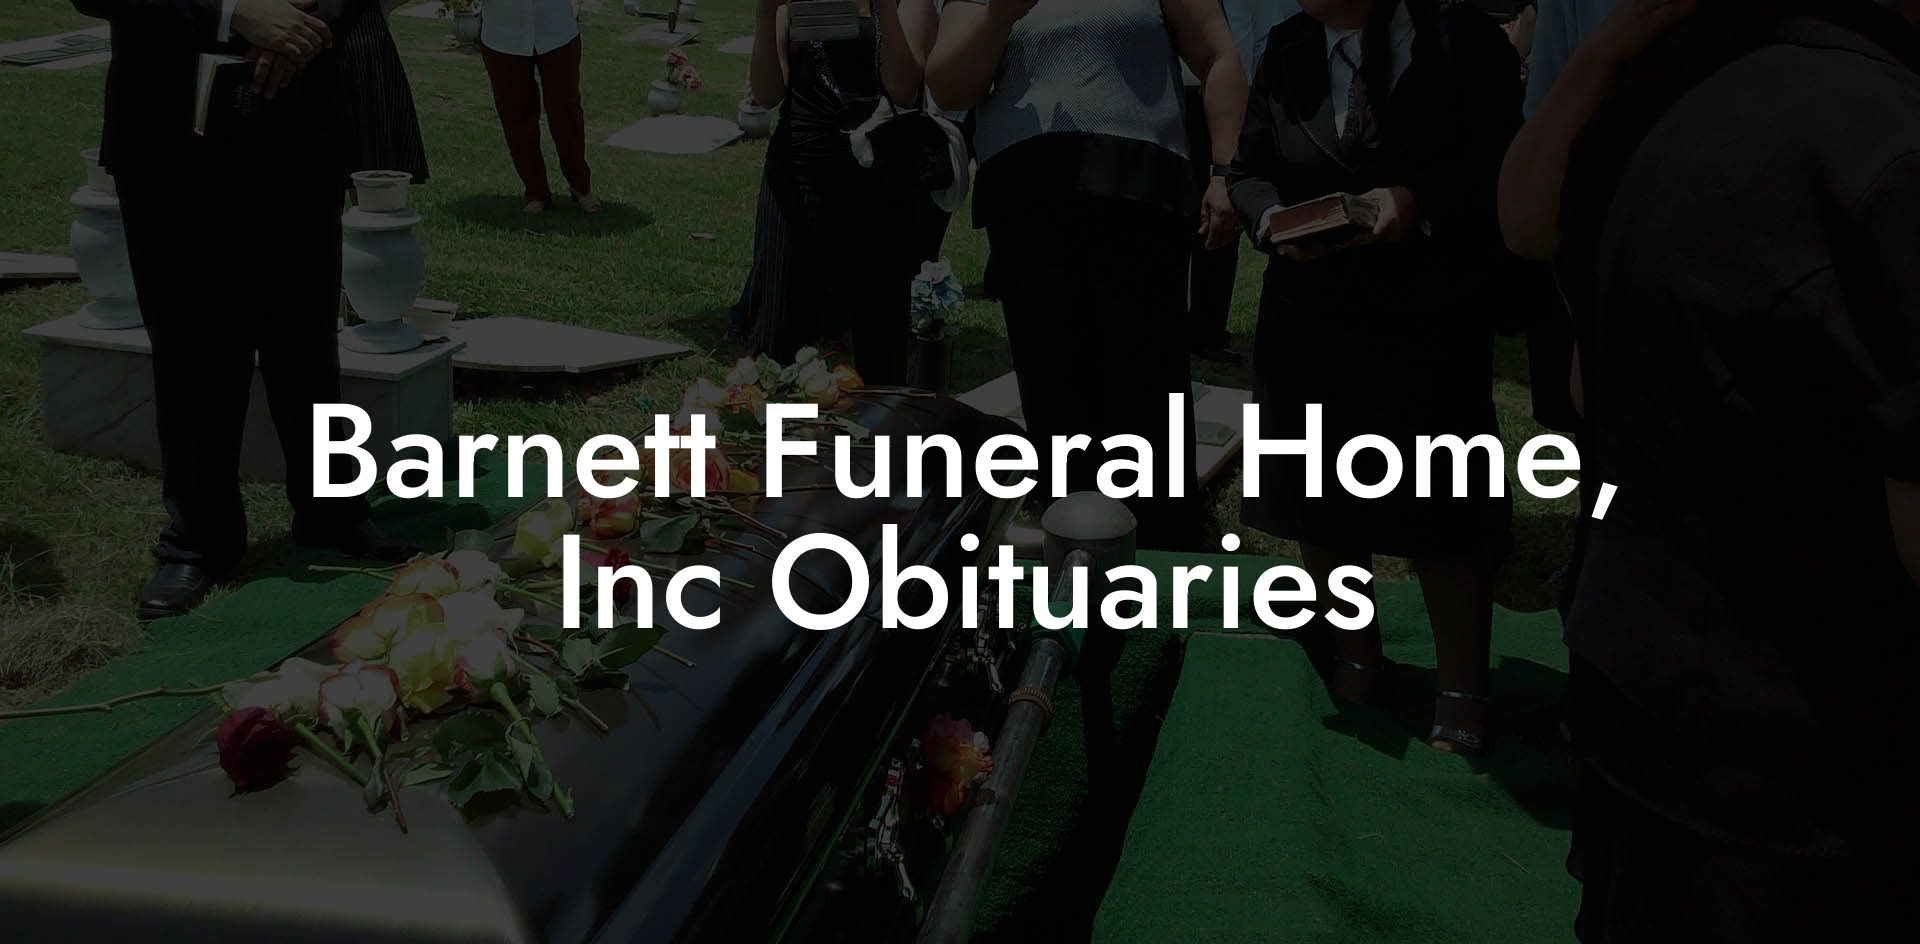 Barnett Funeral Home, Inc Obituaries